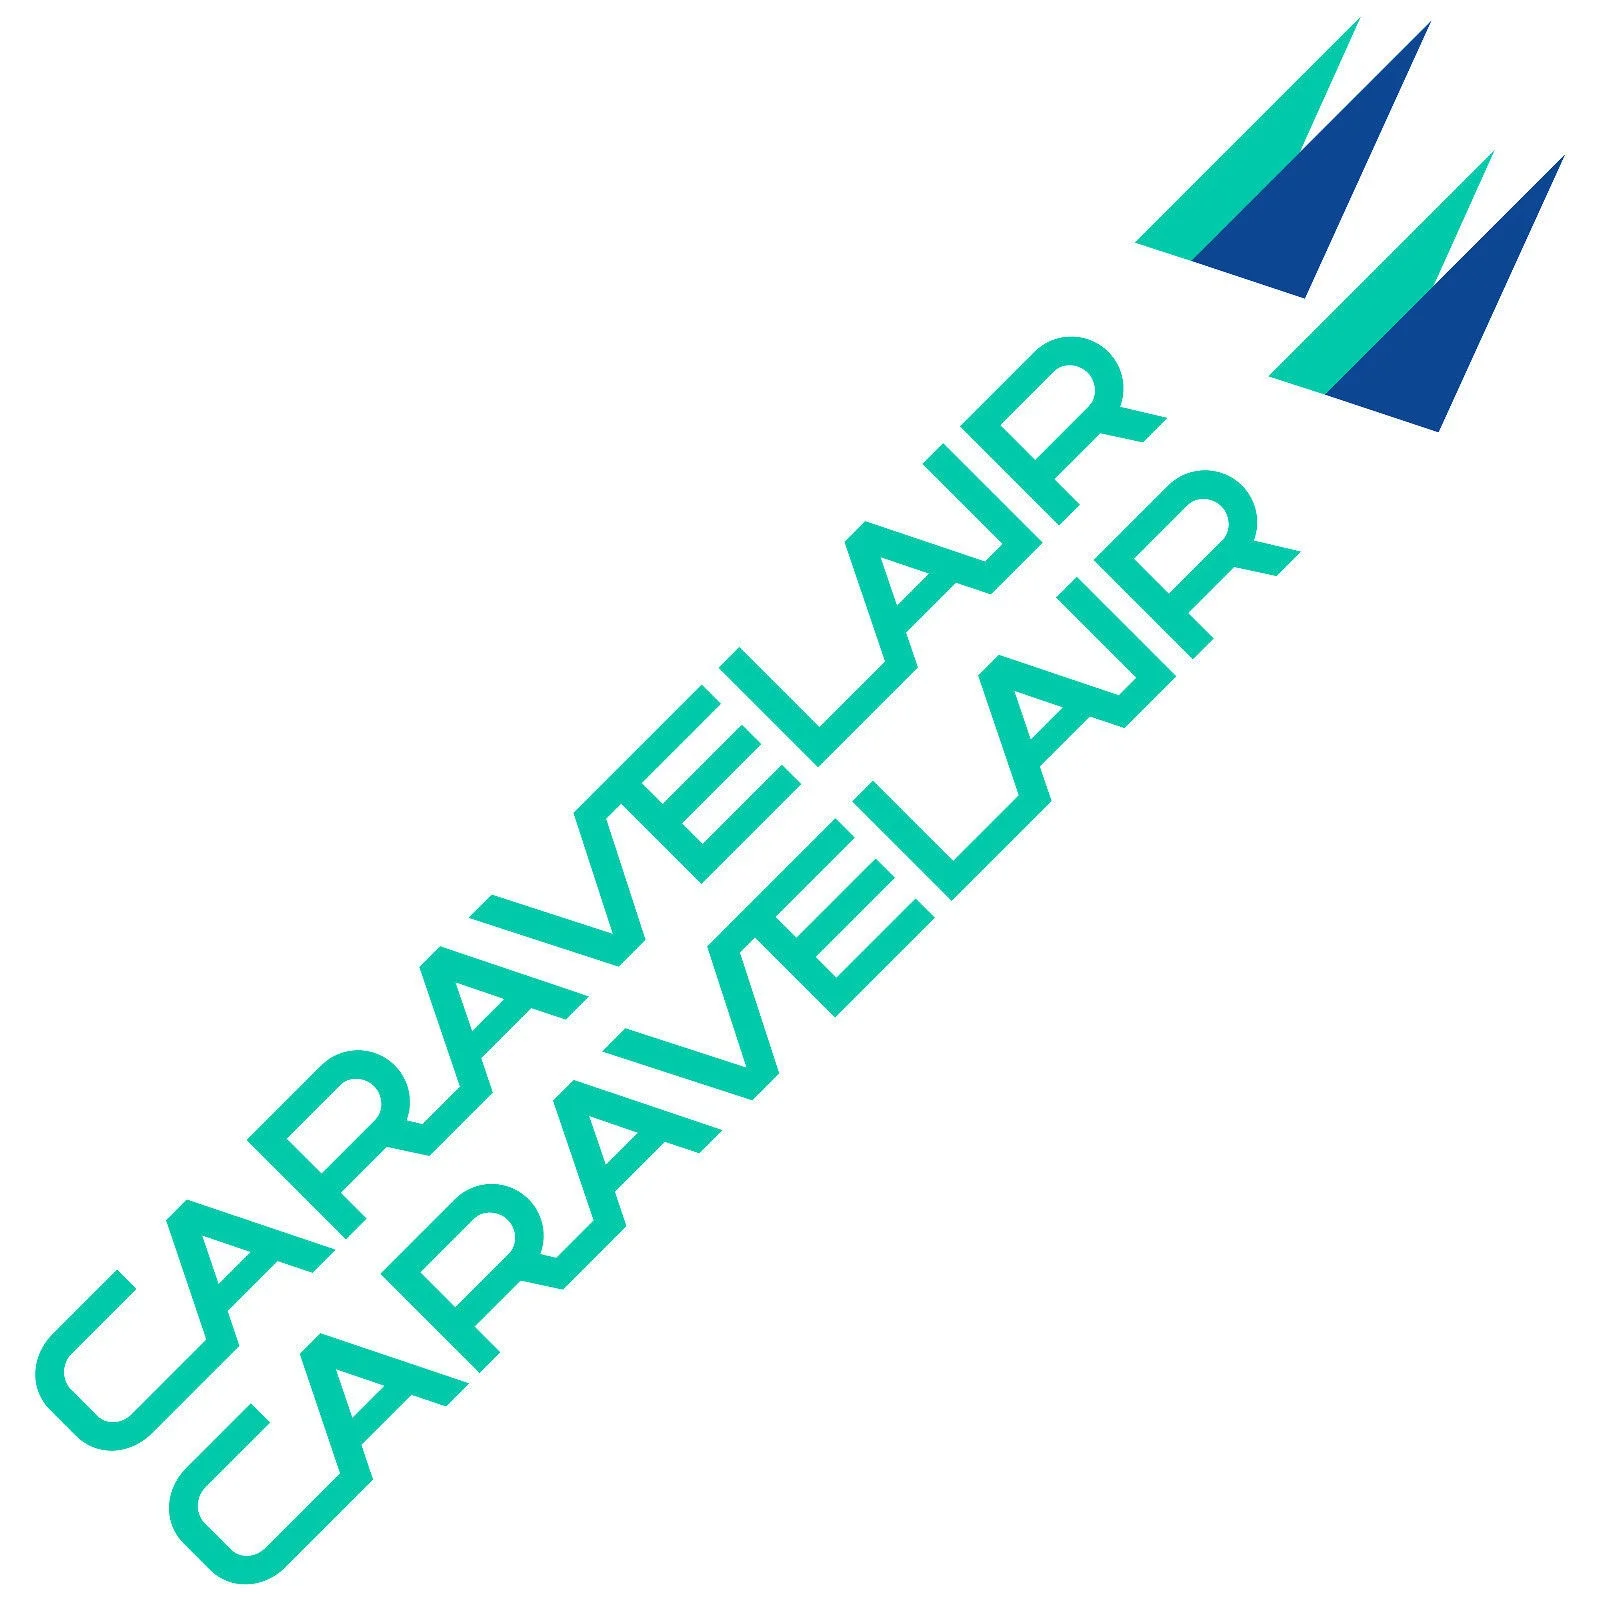 STAR SAM® 2x autocollants CARAVELAIR caravane mobil home camping caravan sticker 